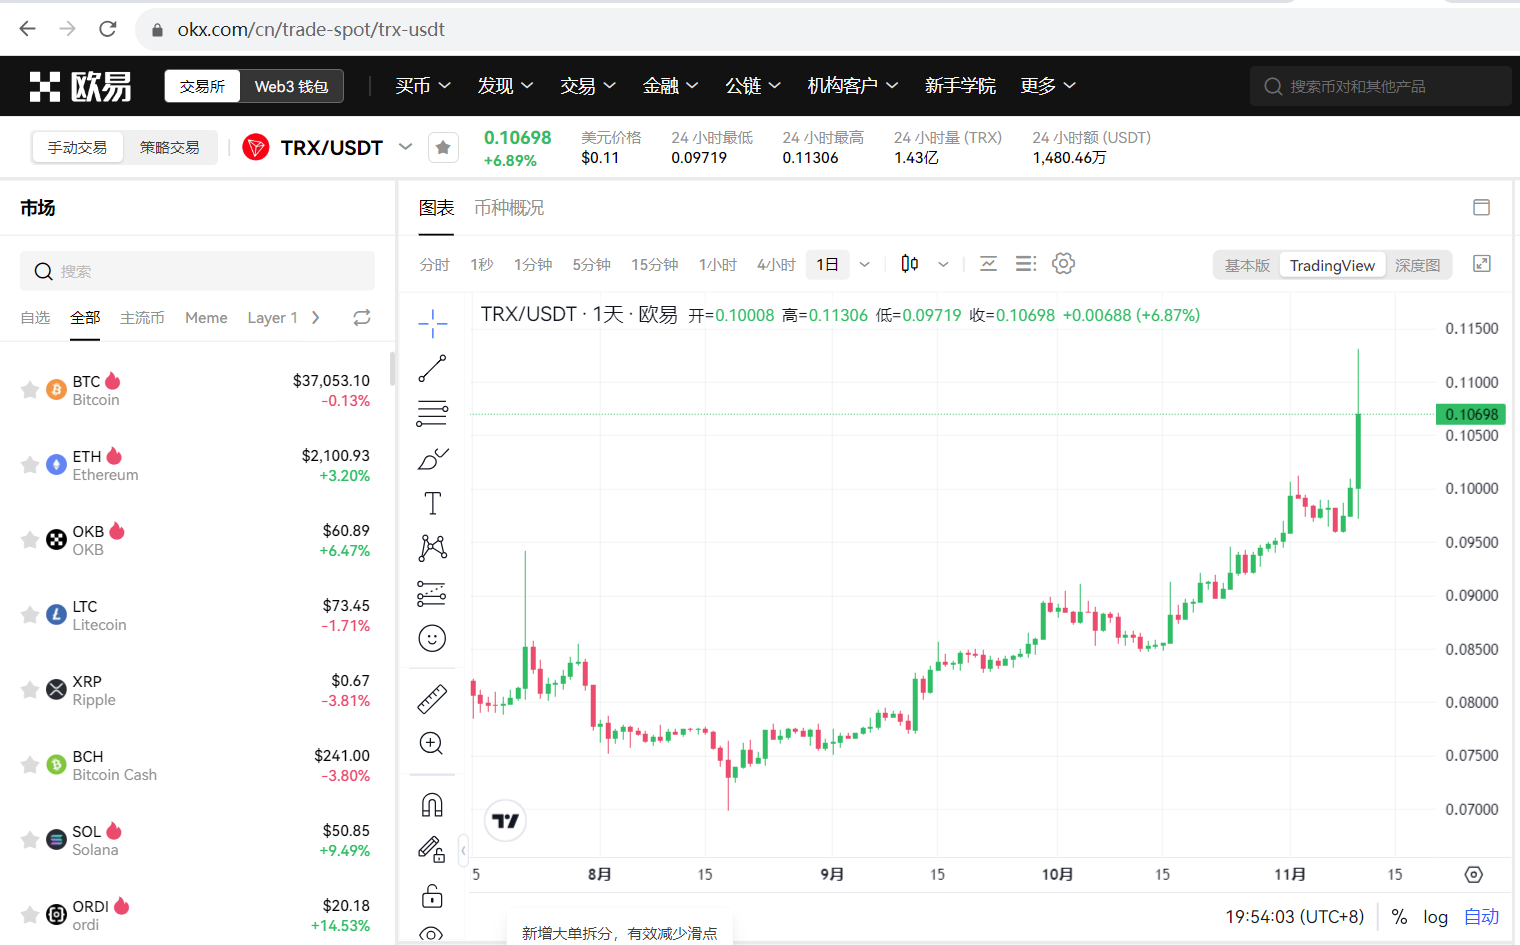 TRX 突破 0.11 USDT，5 分钟涨幅逾 10%